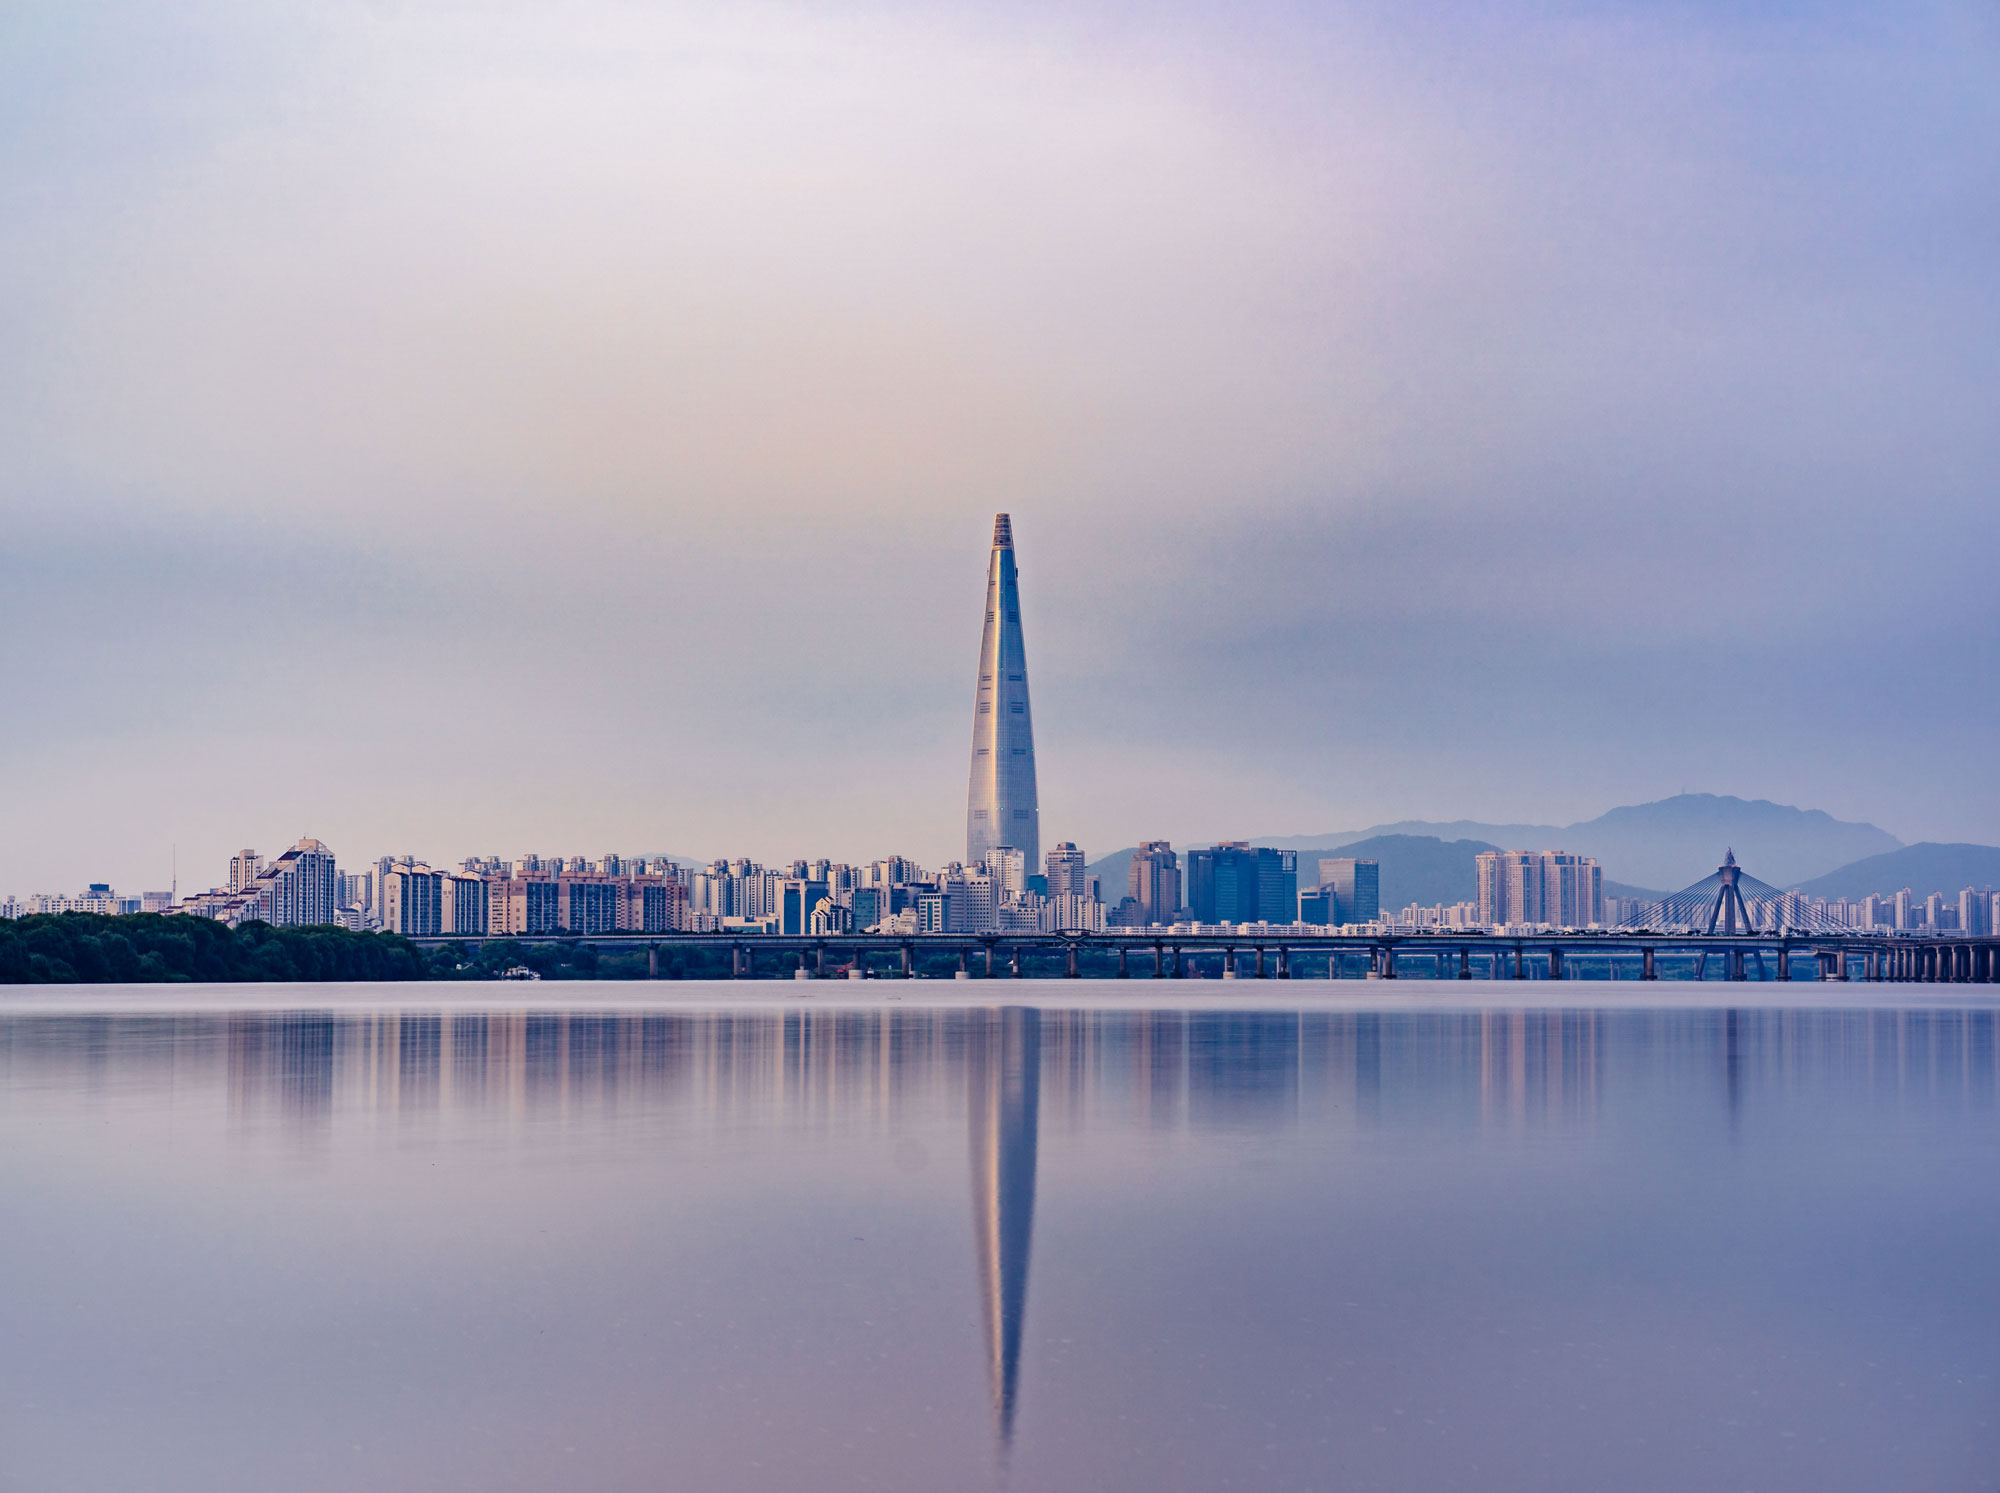 An image of Lotte World Tower Korea